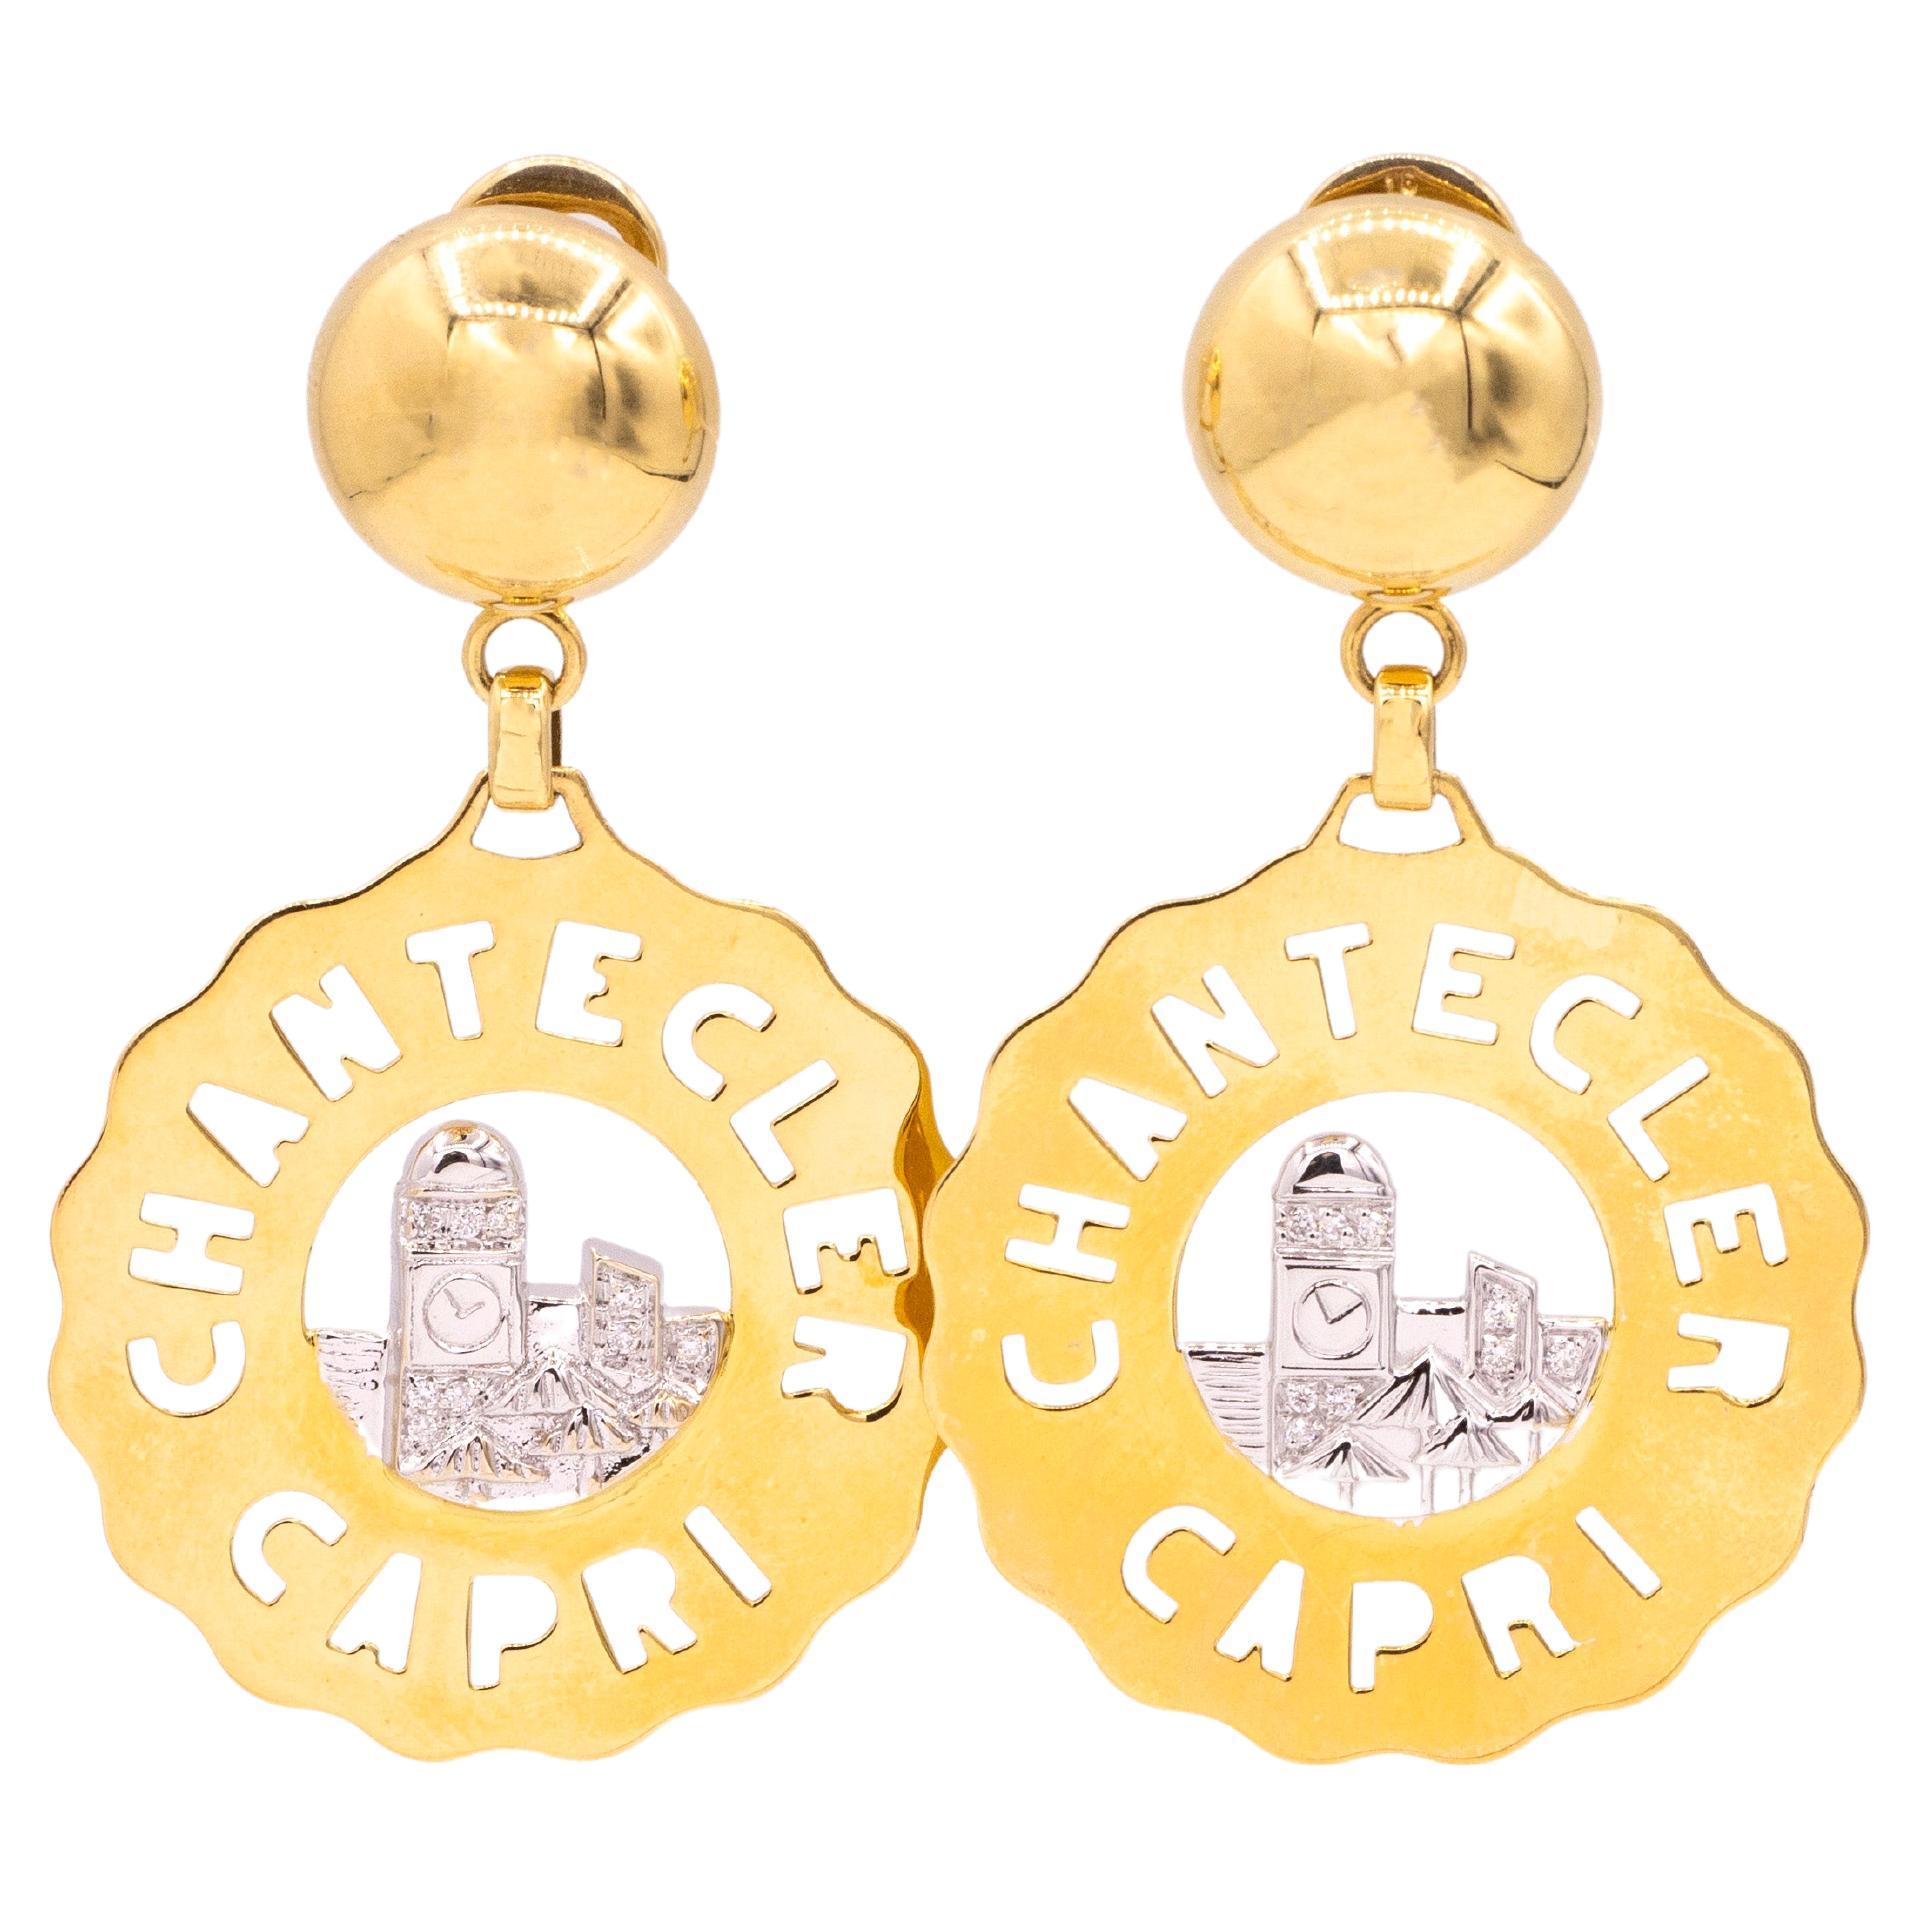 Chantecler 18k Gold Piazzetta Earrings